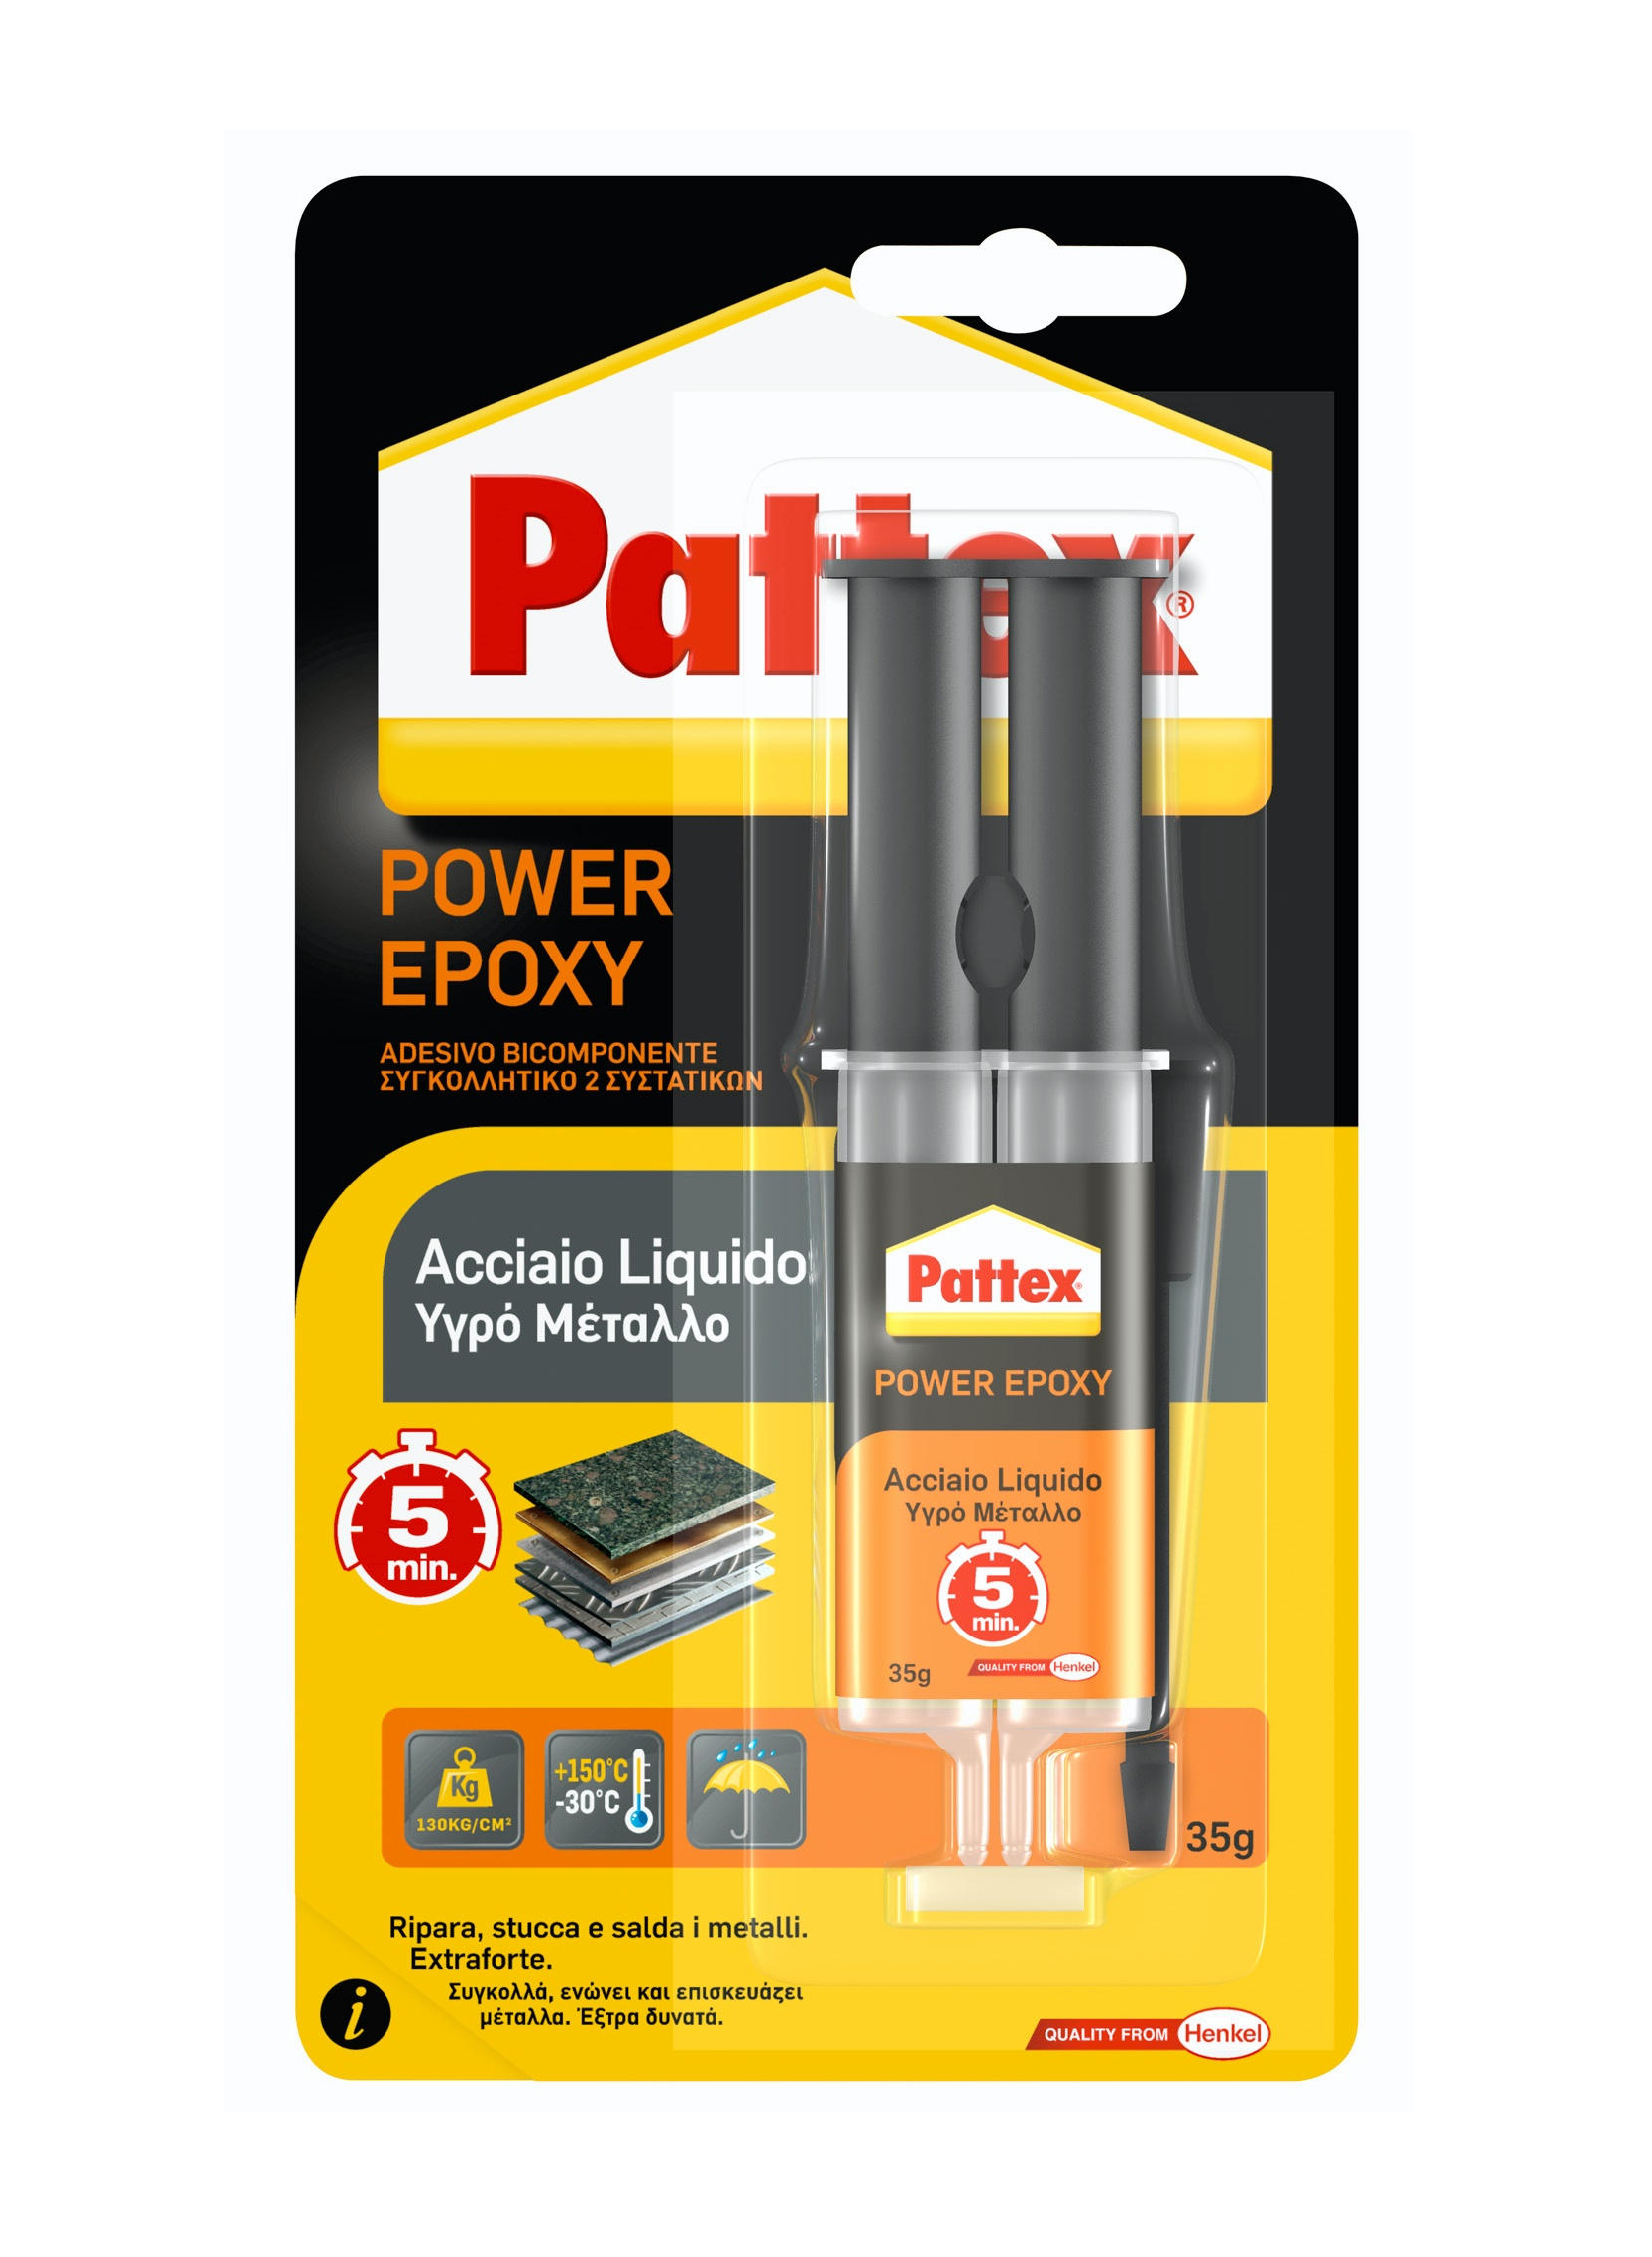 Pattex power epoxy acciaio liquido sy 35g